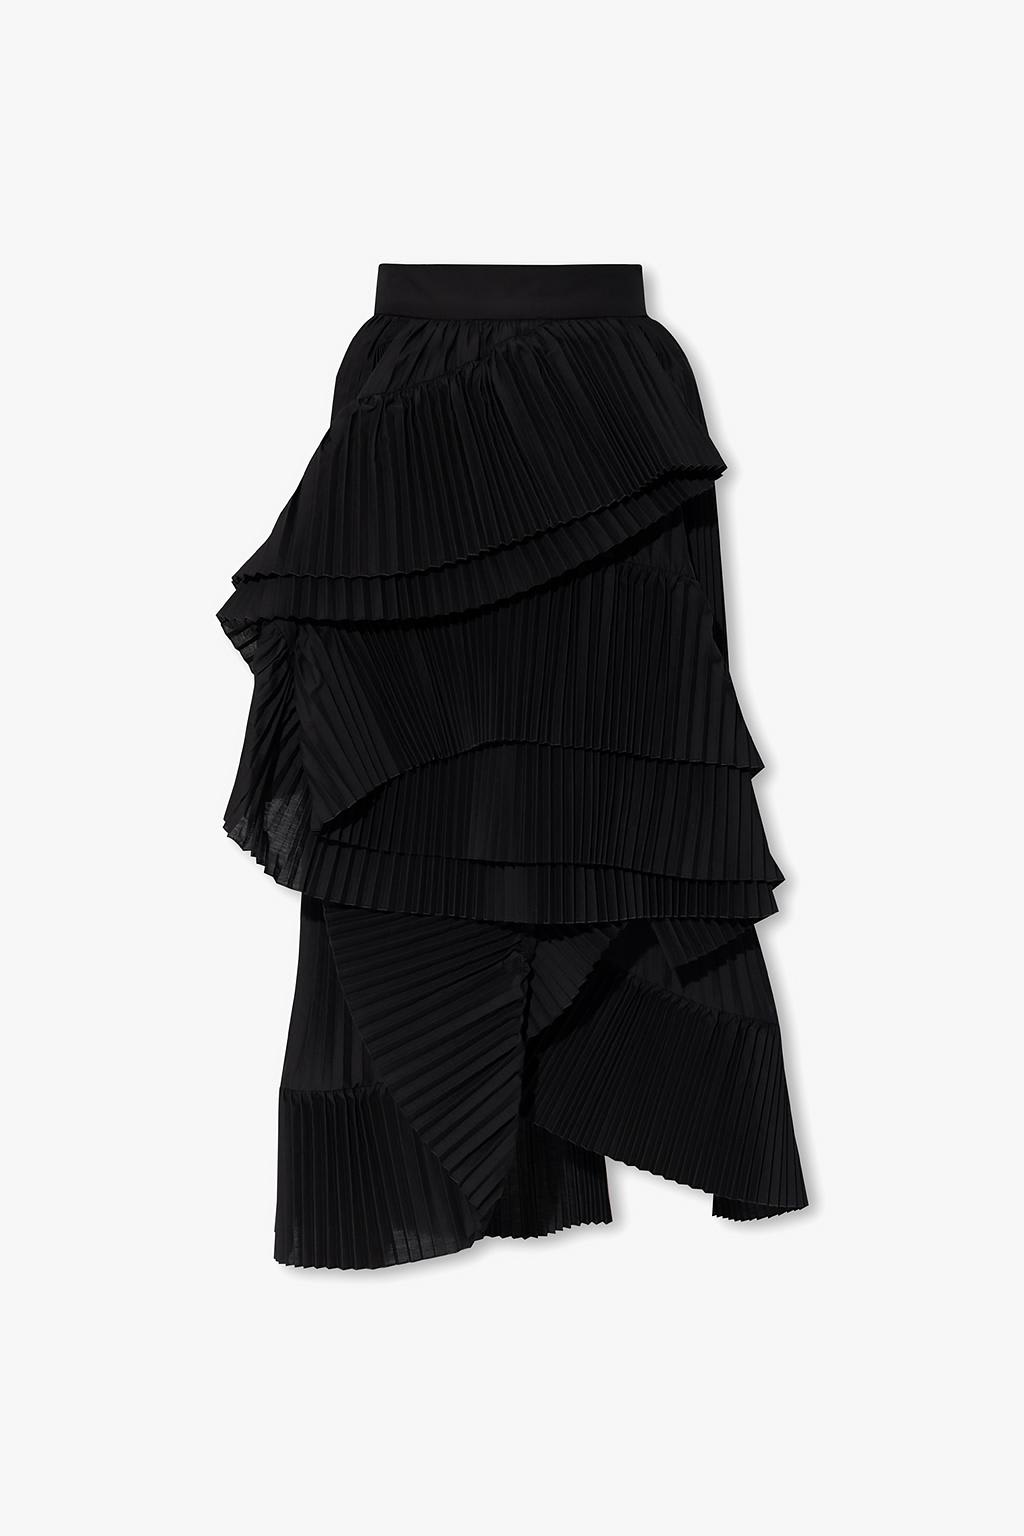 Dries Van Noten Pleated Skirt With Ruffles In Black